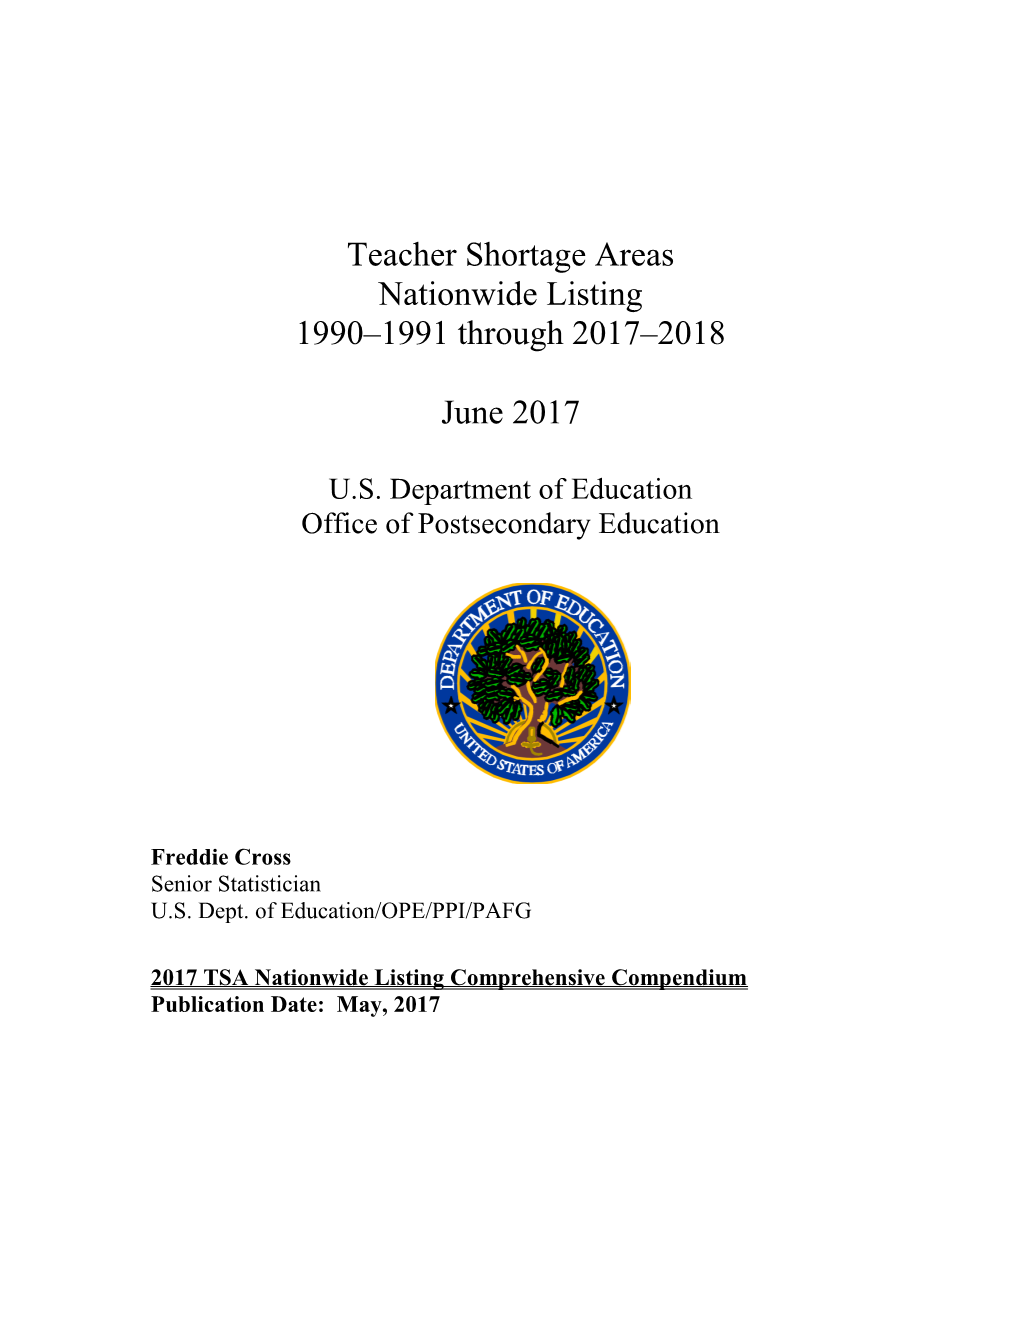 Teacher Shortage Areas Nationwide Listing, 1990-1991 Through 2015-2016 (MS Word)